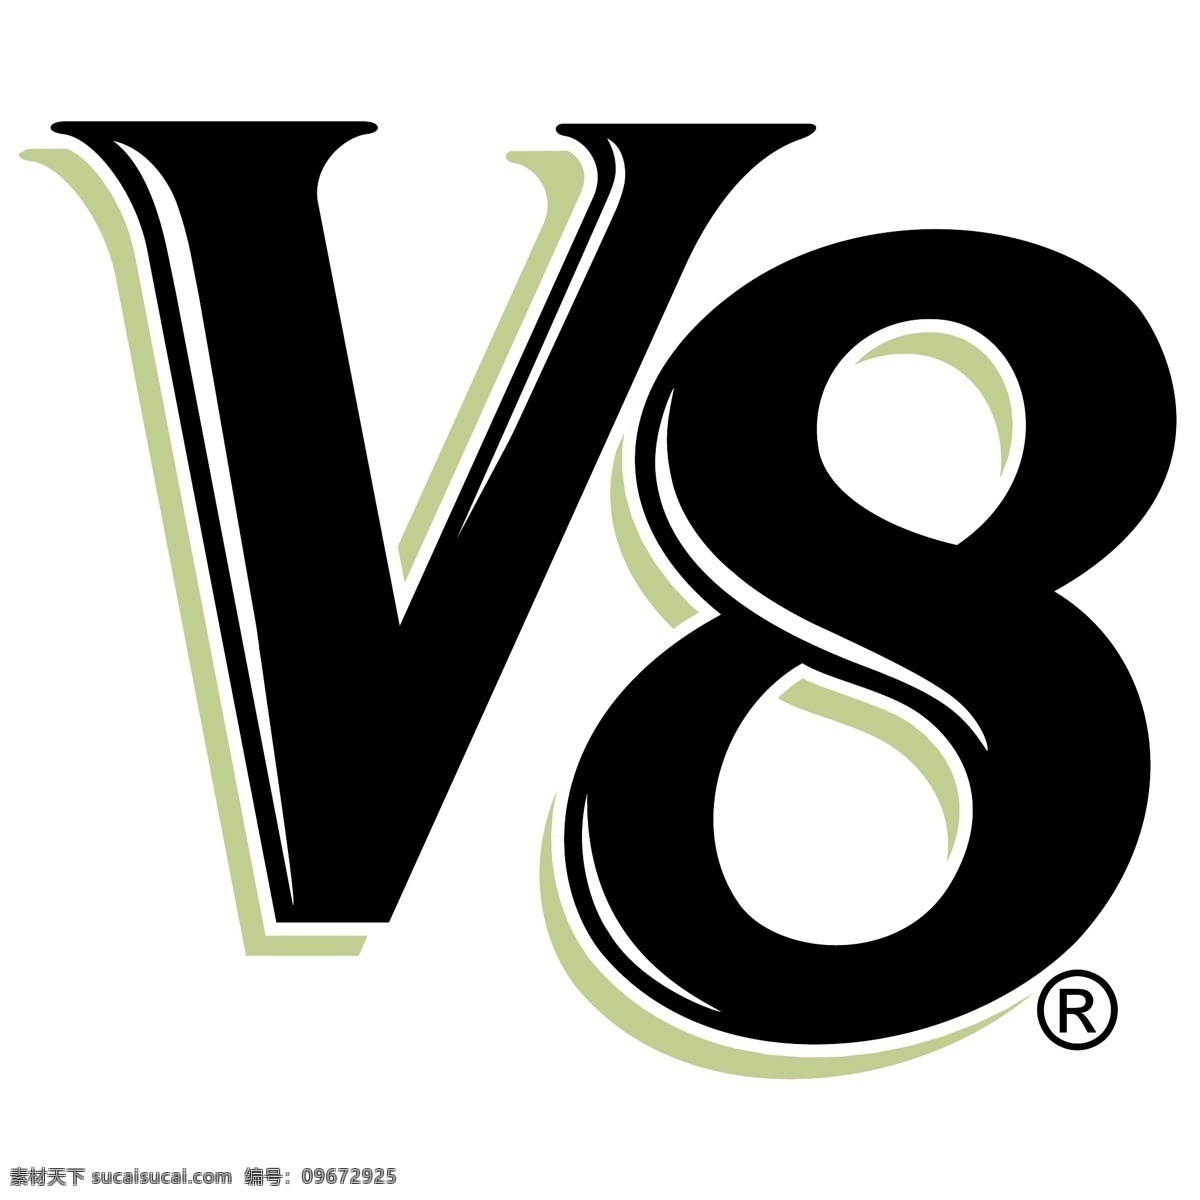 v8免费下载 v8 引擎 标识 标识为免费 psd源文件 logo设计